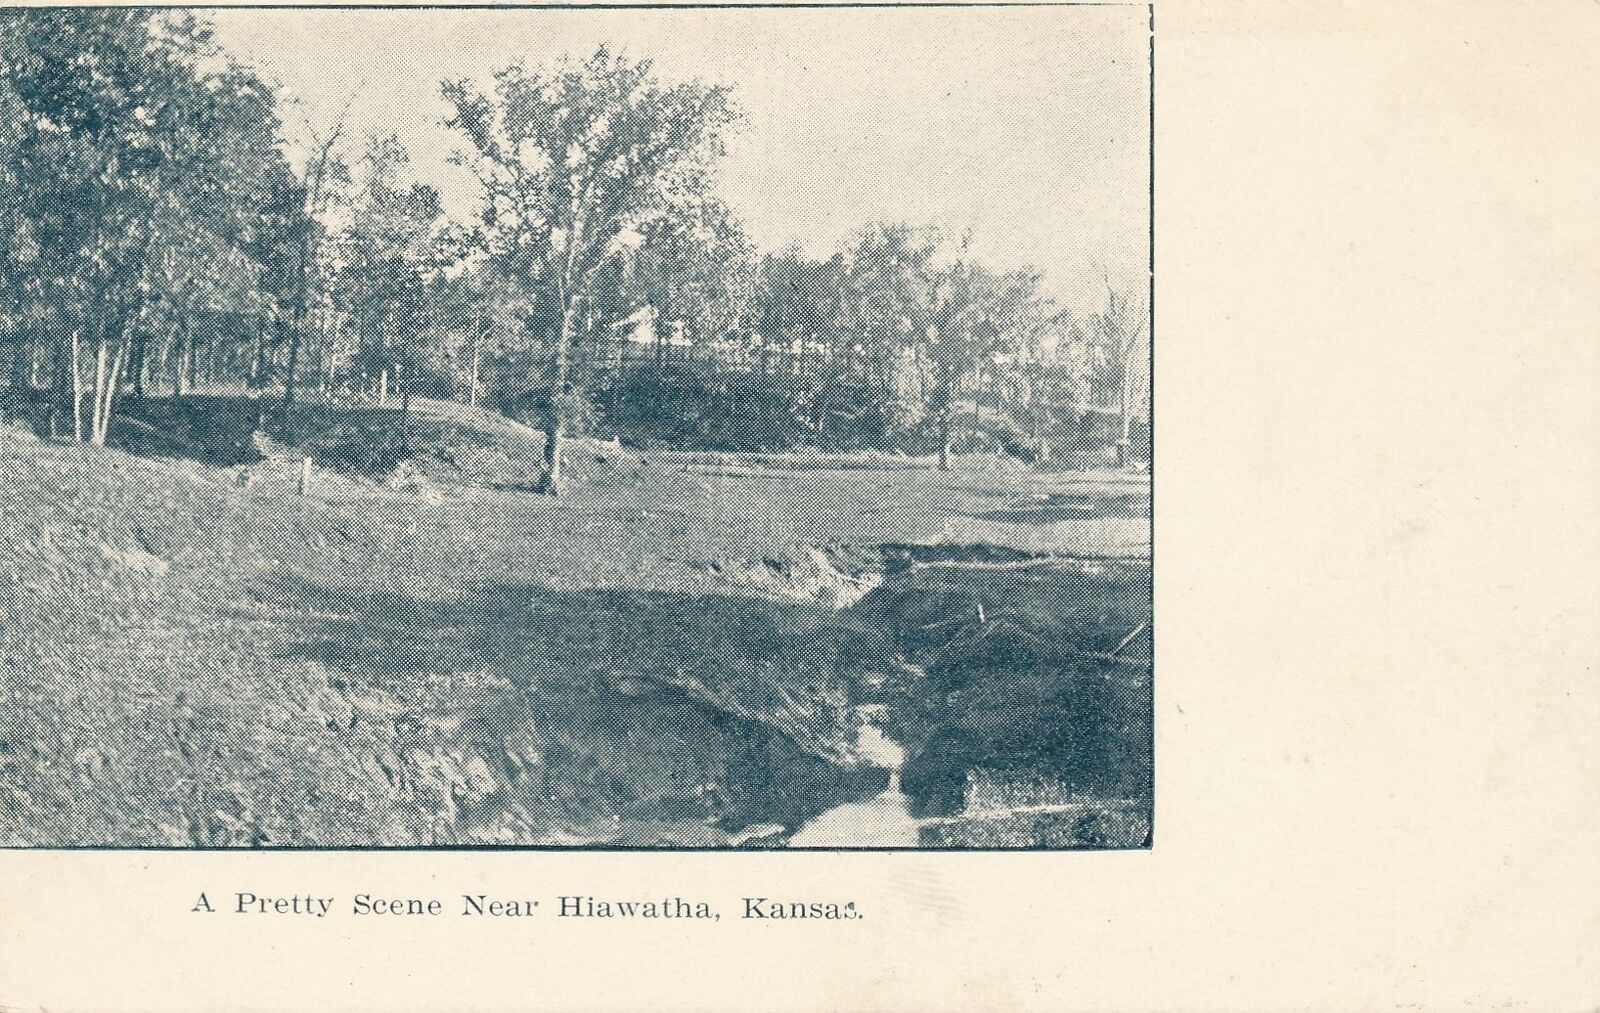 HIAWATHA KS – A Pretty Scene near Hiawatha – udb (pre 1908)